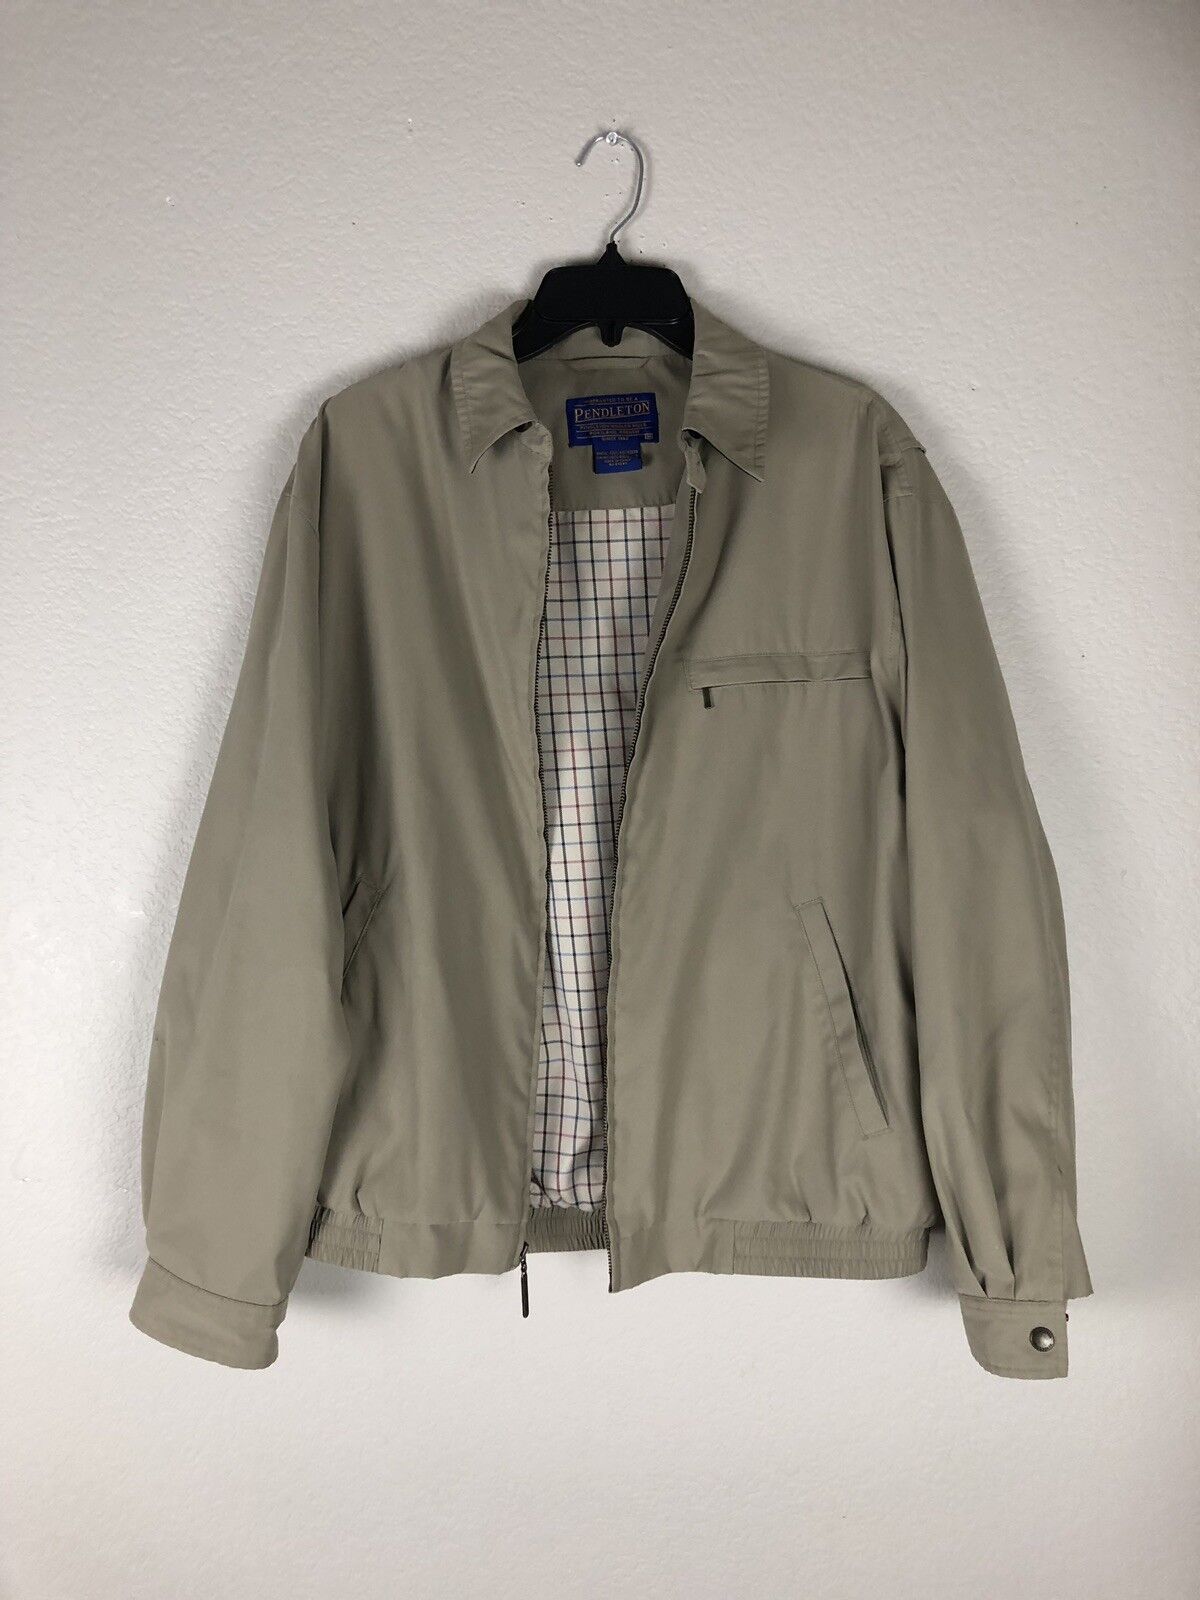 Pendleton Lightweight Jacket Vintage Size Medium